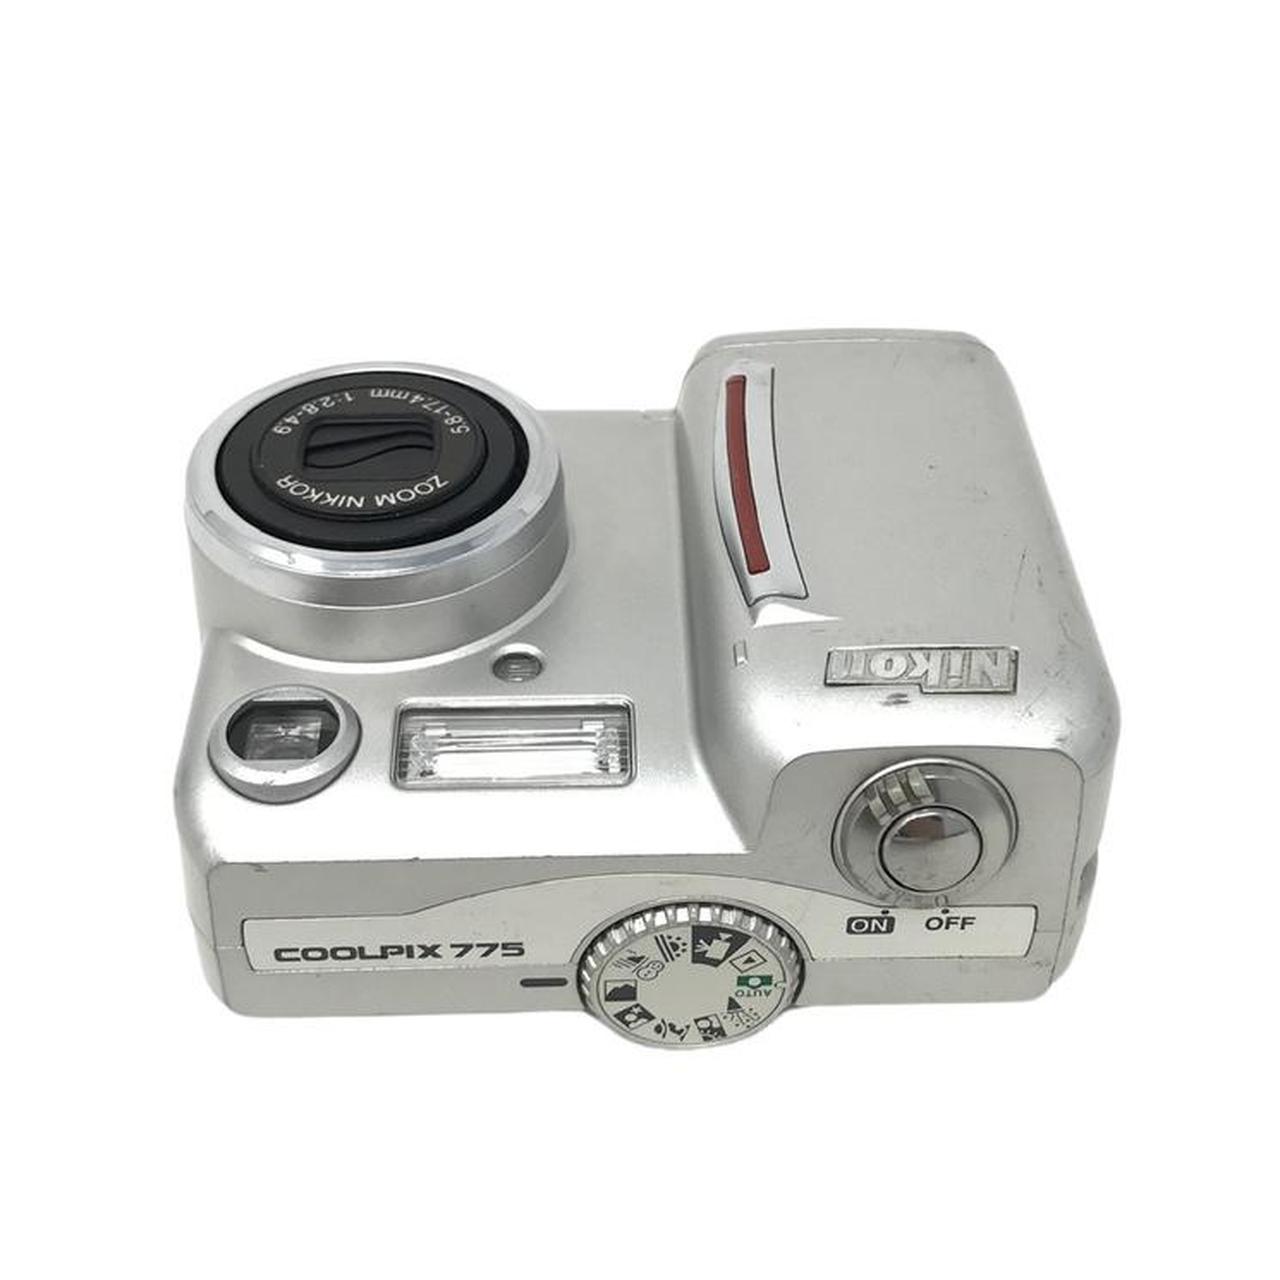 Product Image 2 - Nikon Coolpix 775 Digital Camera

Comes